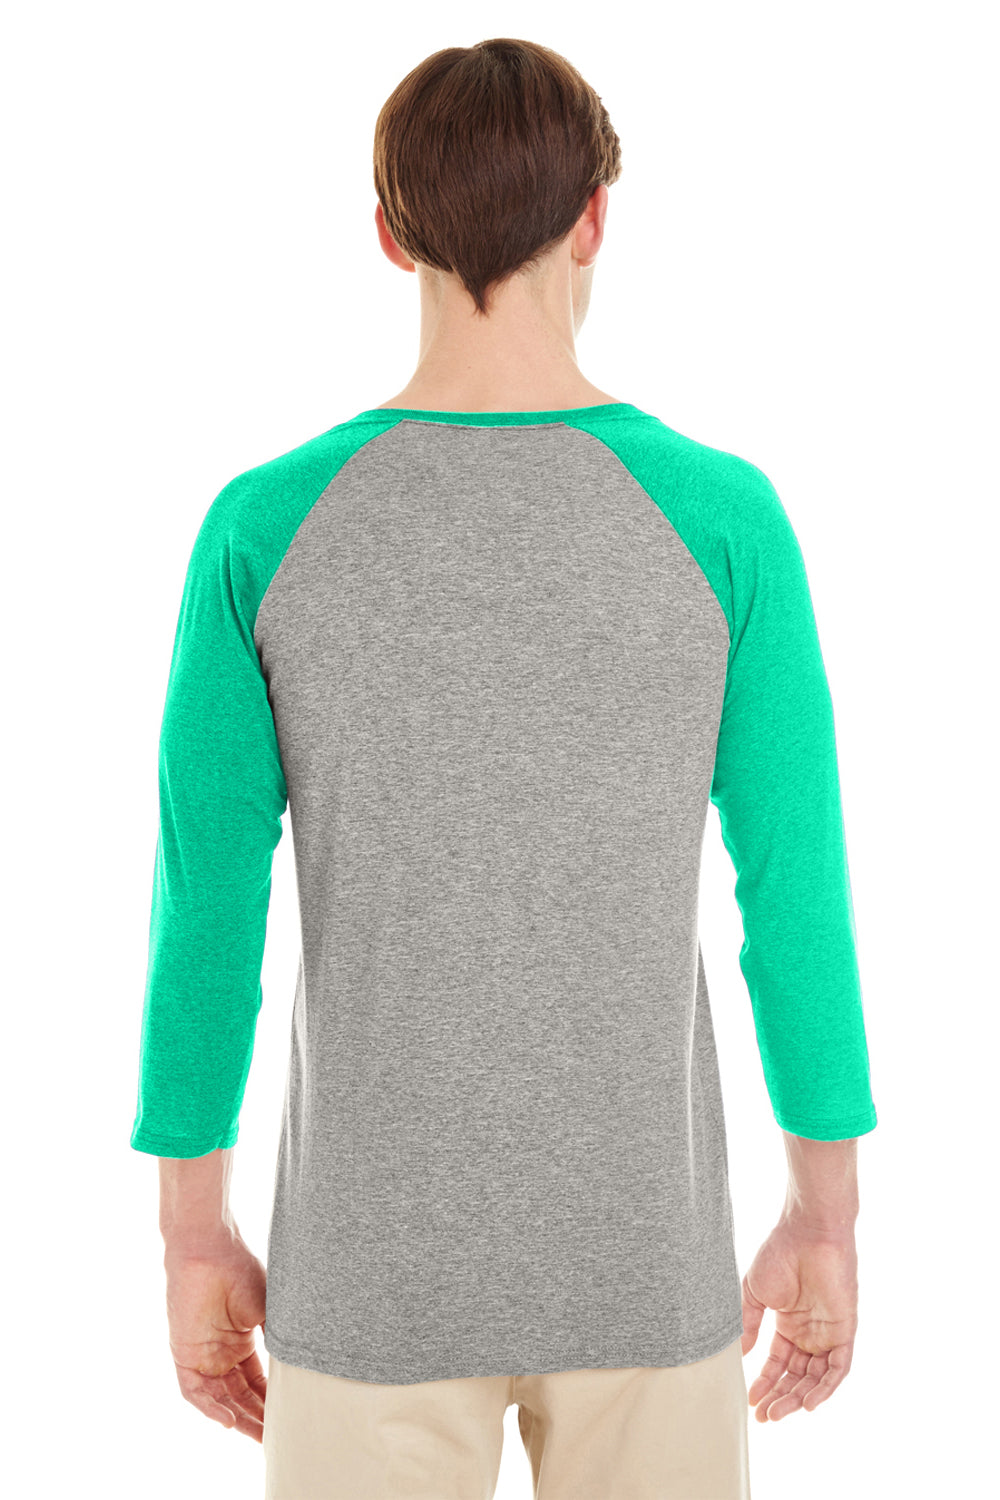 Jerzees 601RR 3/4 Sleeve Crewneck T-Shirt Oxford Grey/Mint Green Back